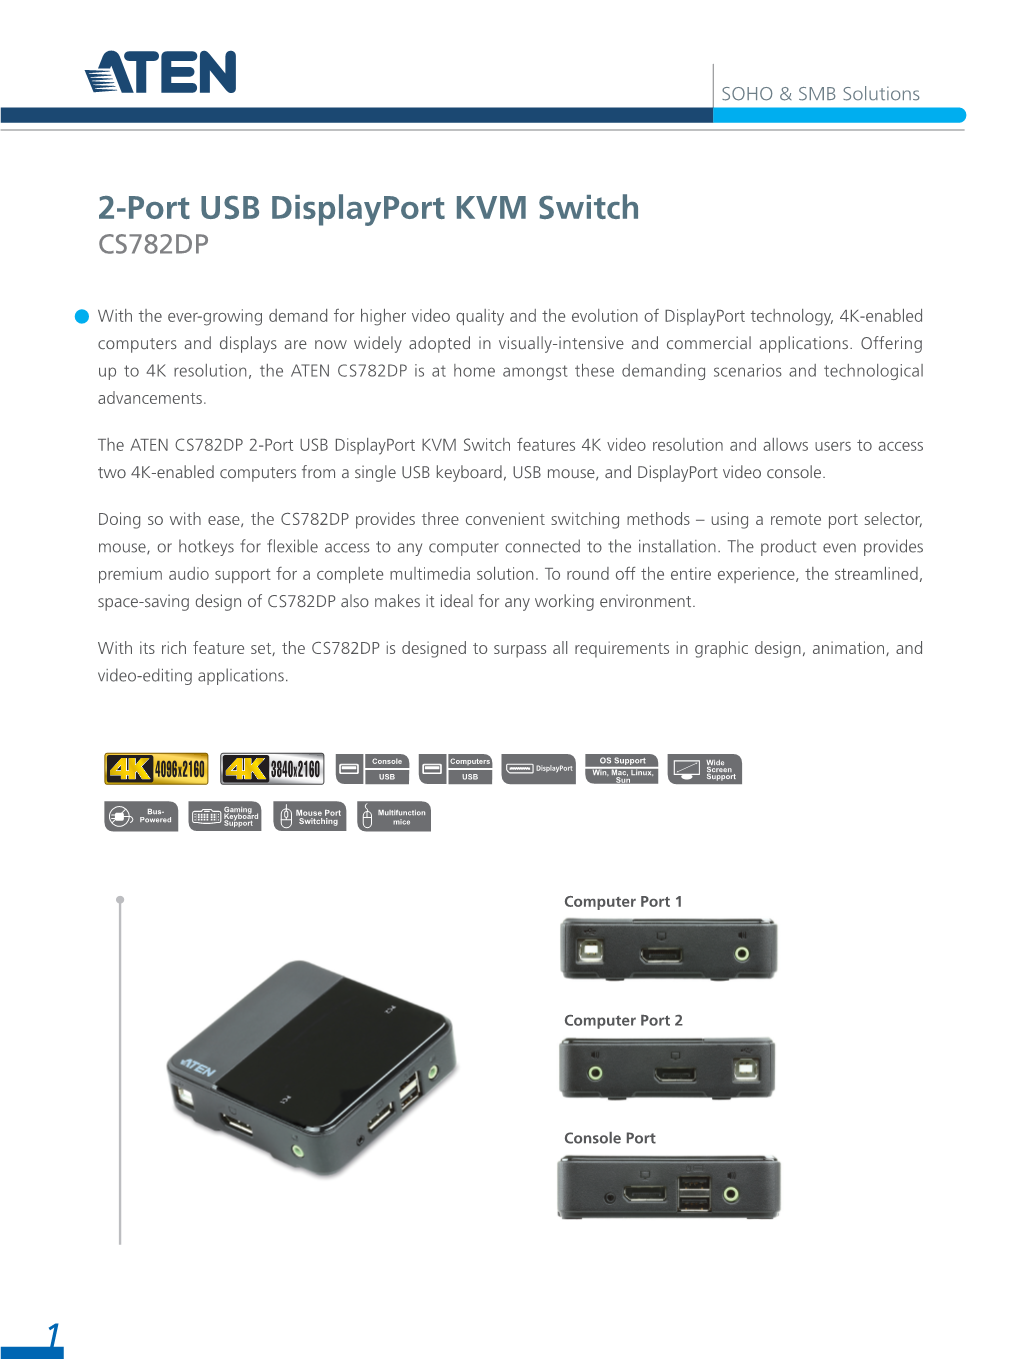 2-Port USB Displayport KVM Switch CS782DP